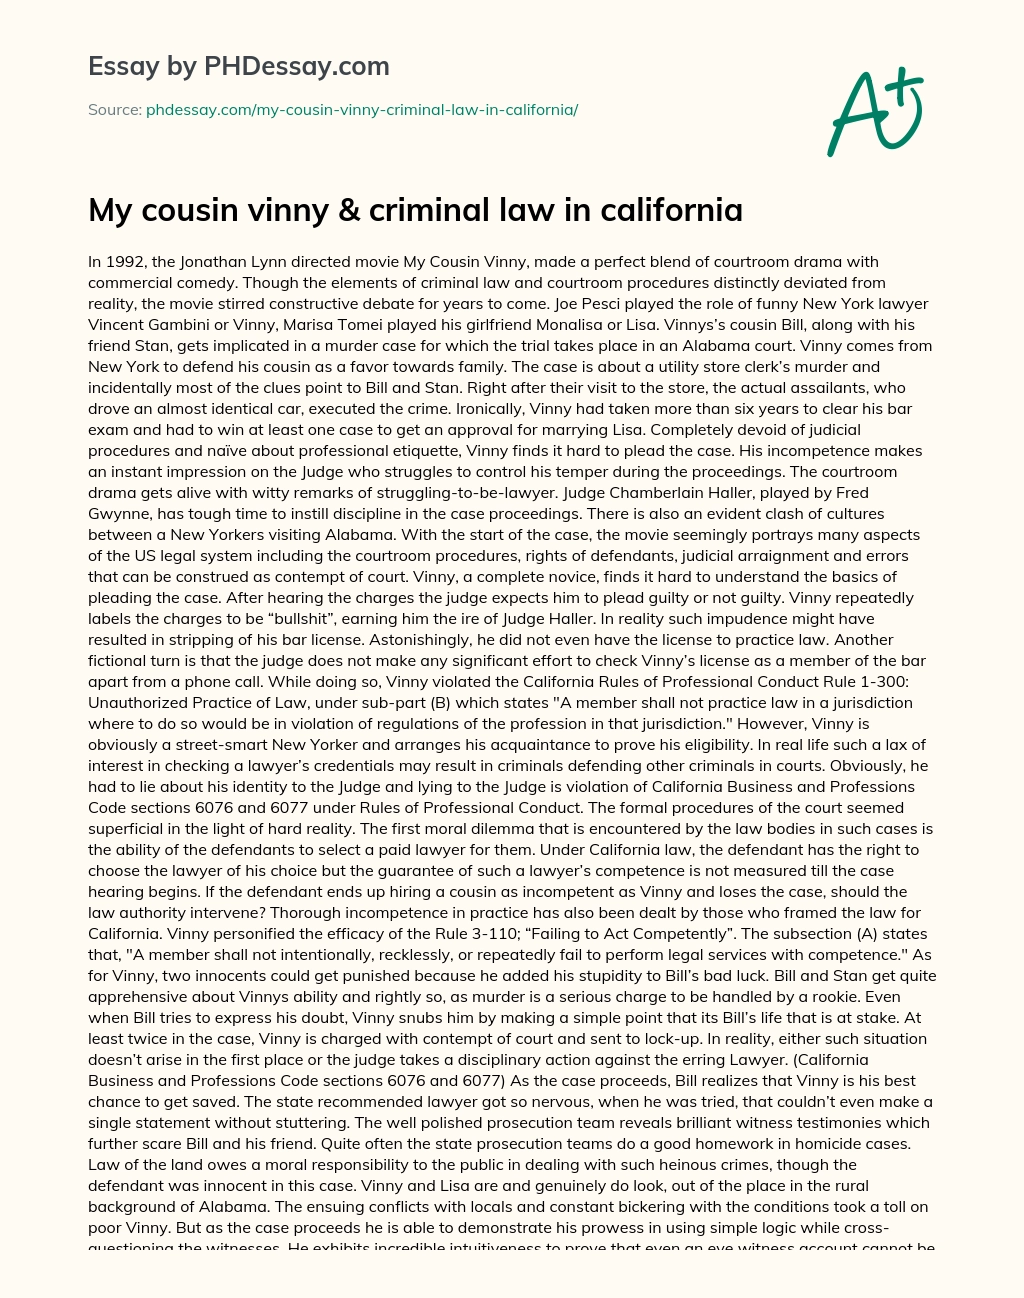 My cousin vinny & criminal law in california essay